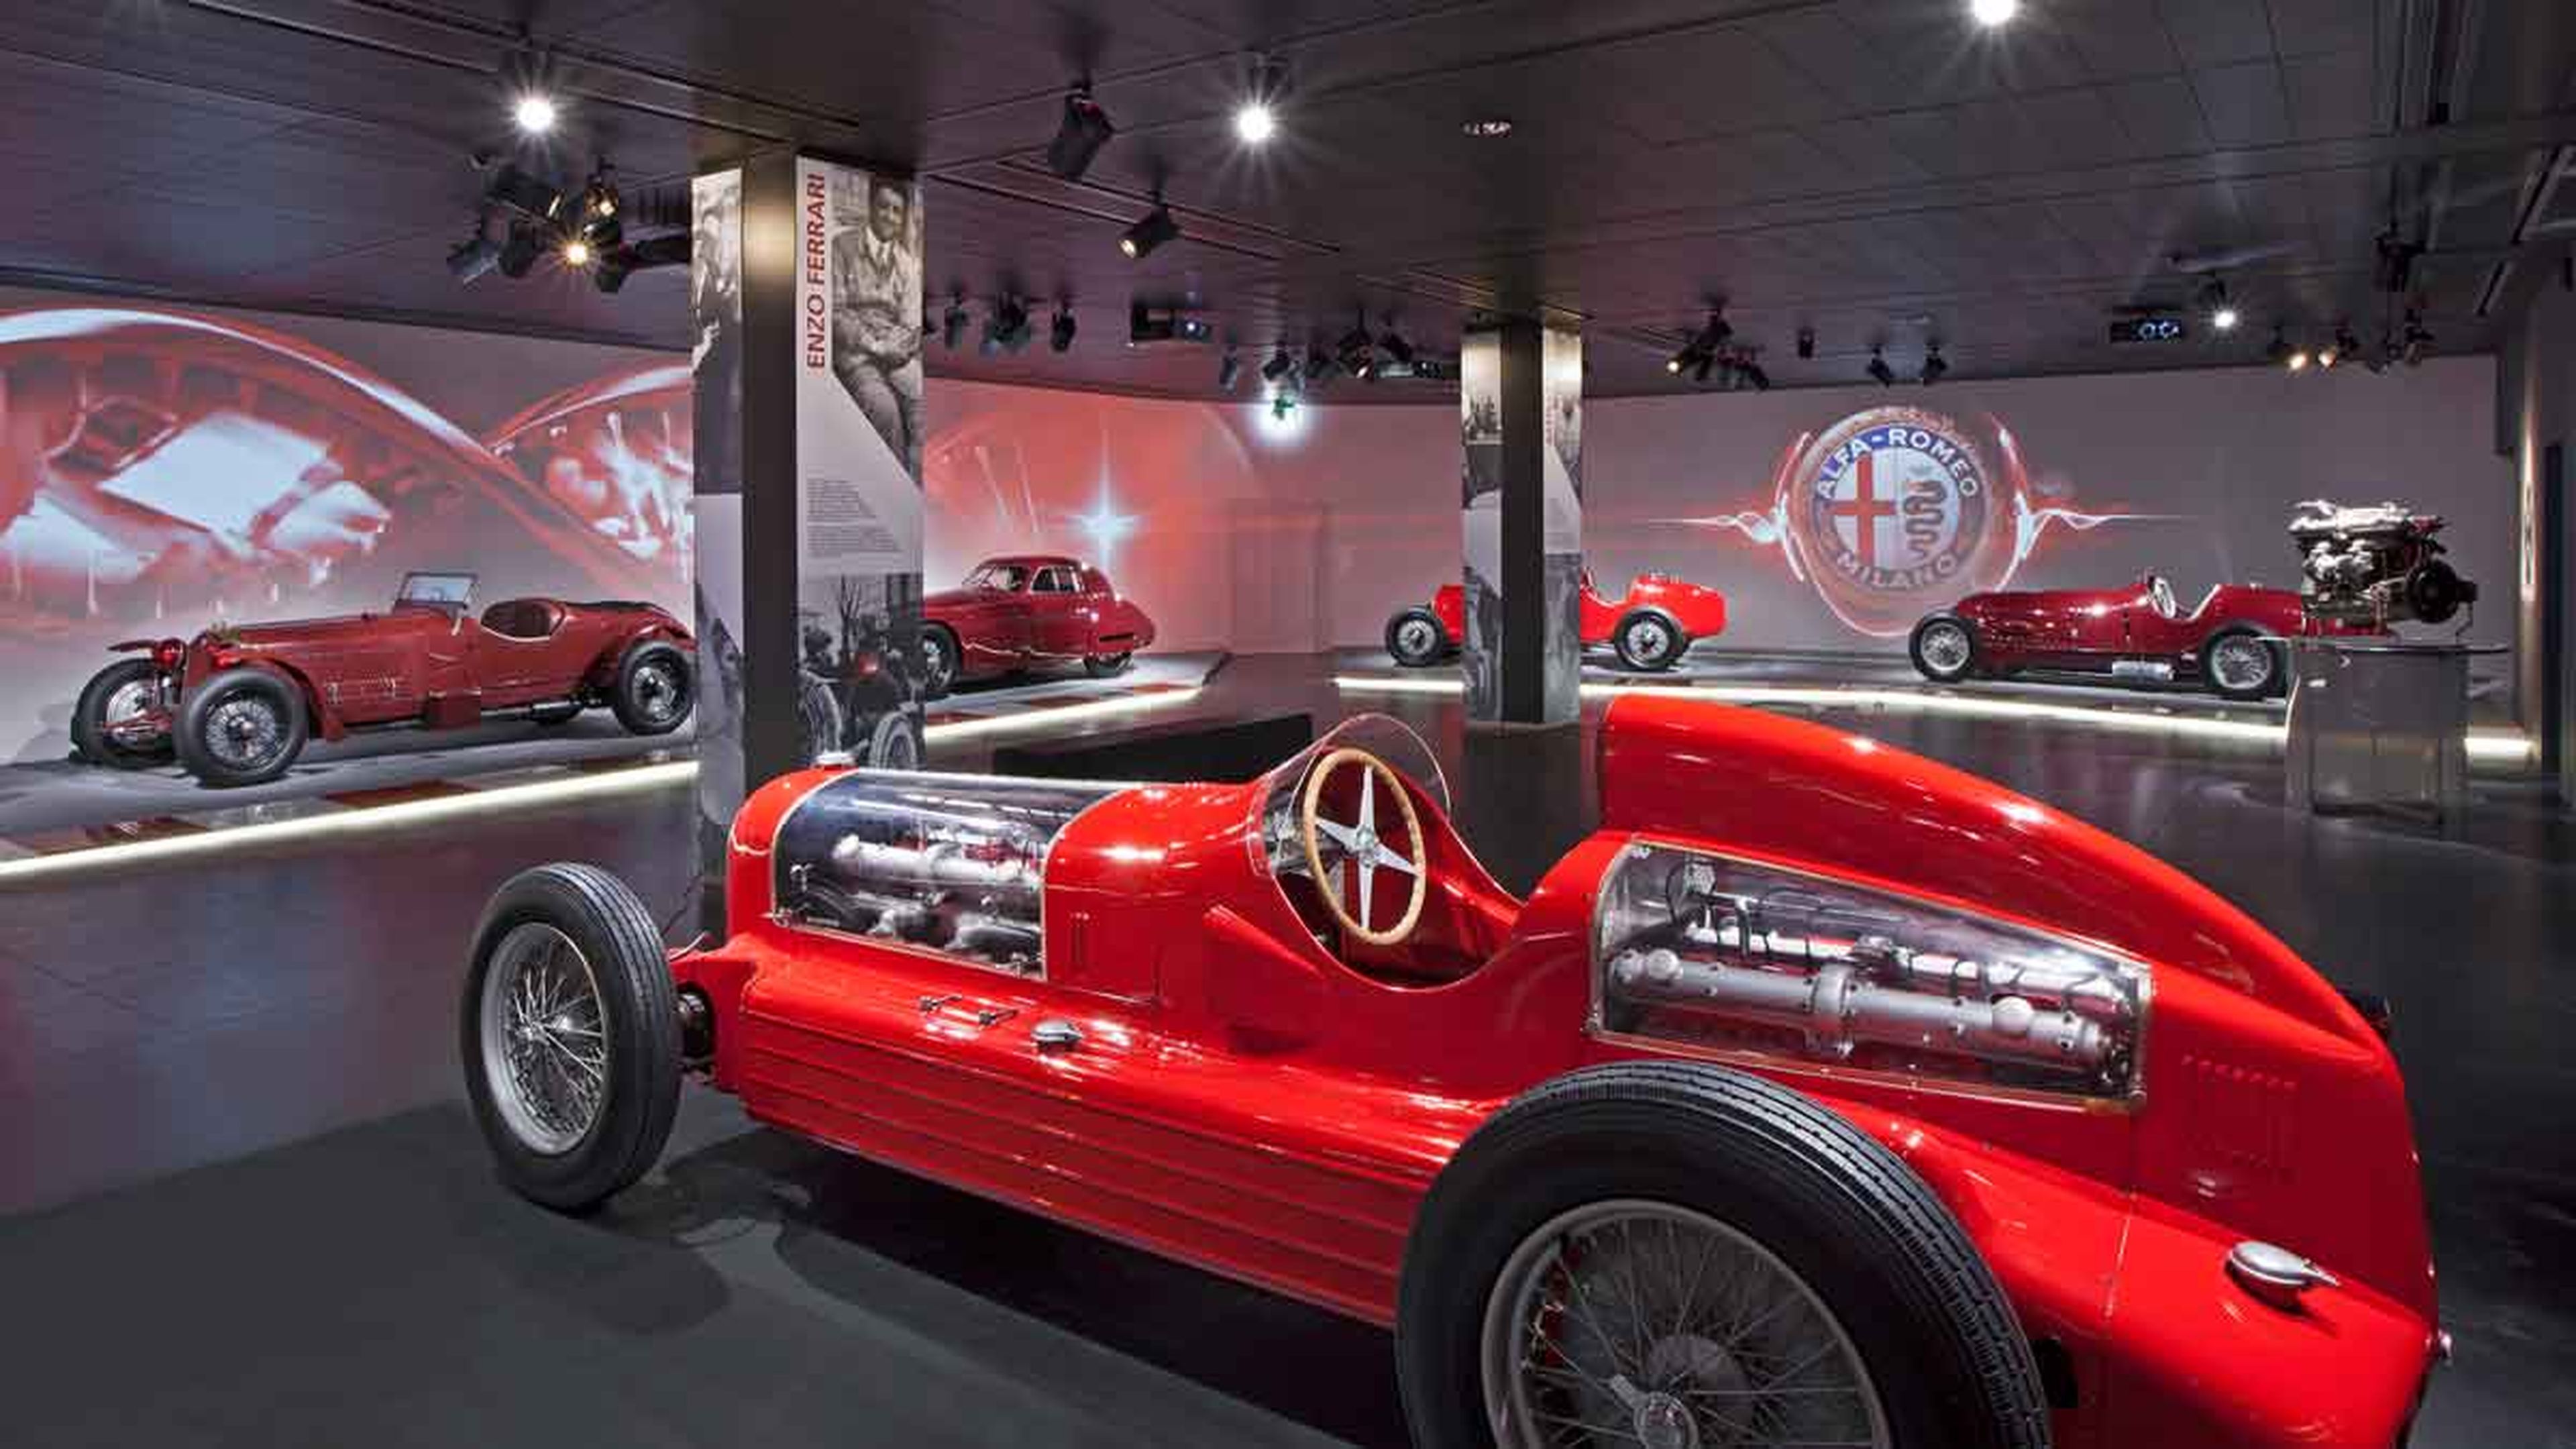 Museo histórico de Arese de Alfa Romeo